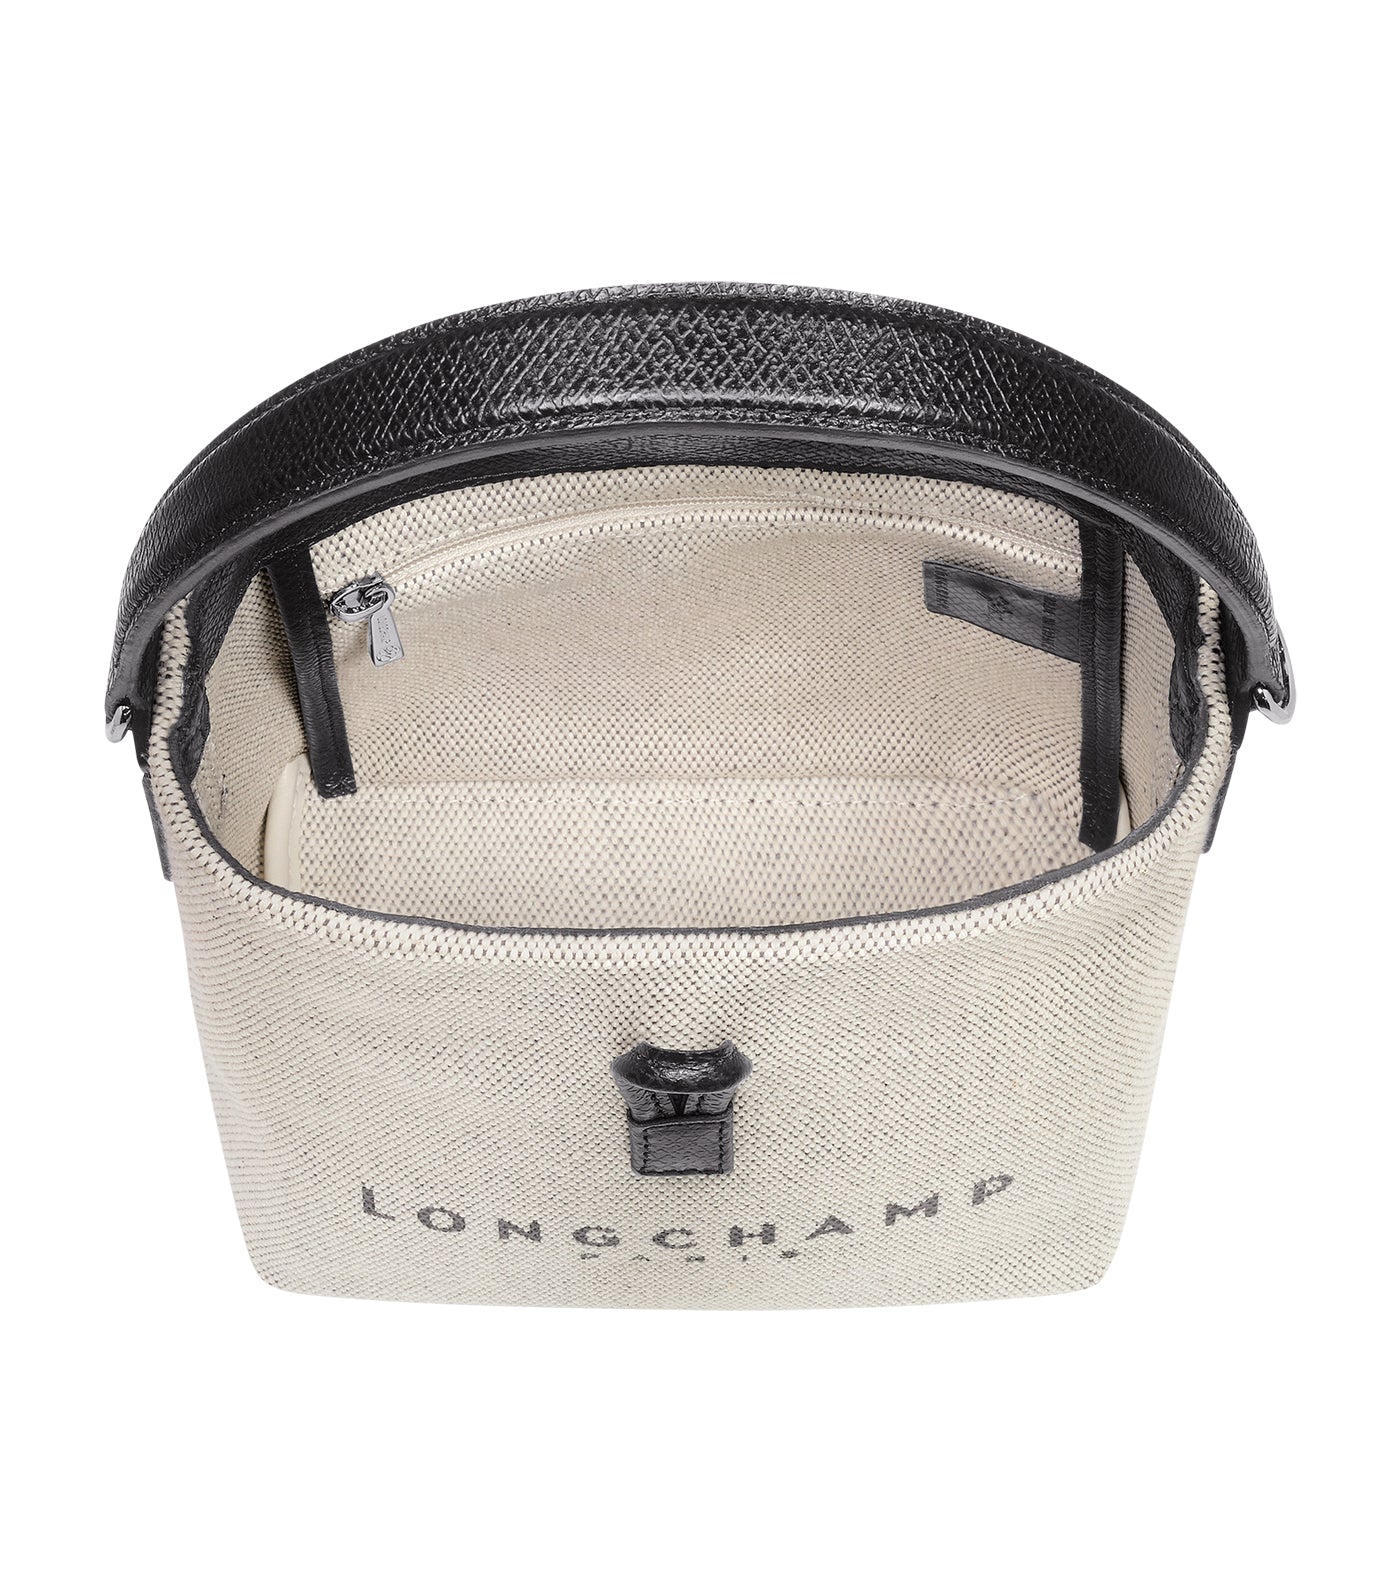 Longchamp Essential Toile Open Tote